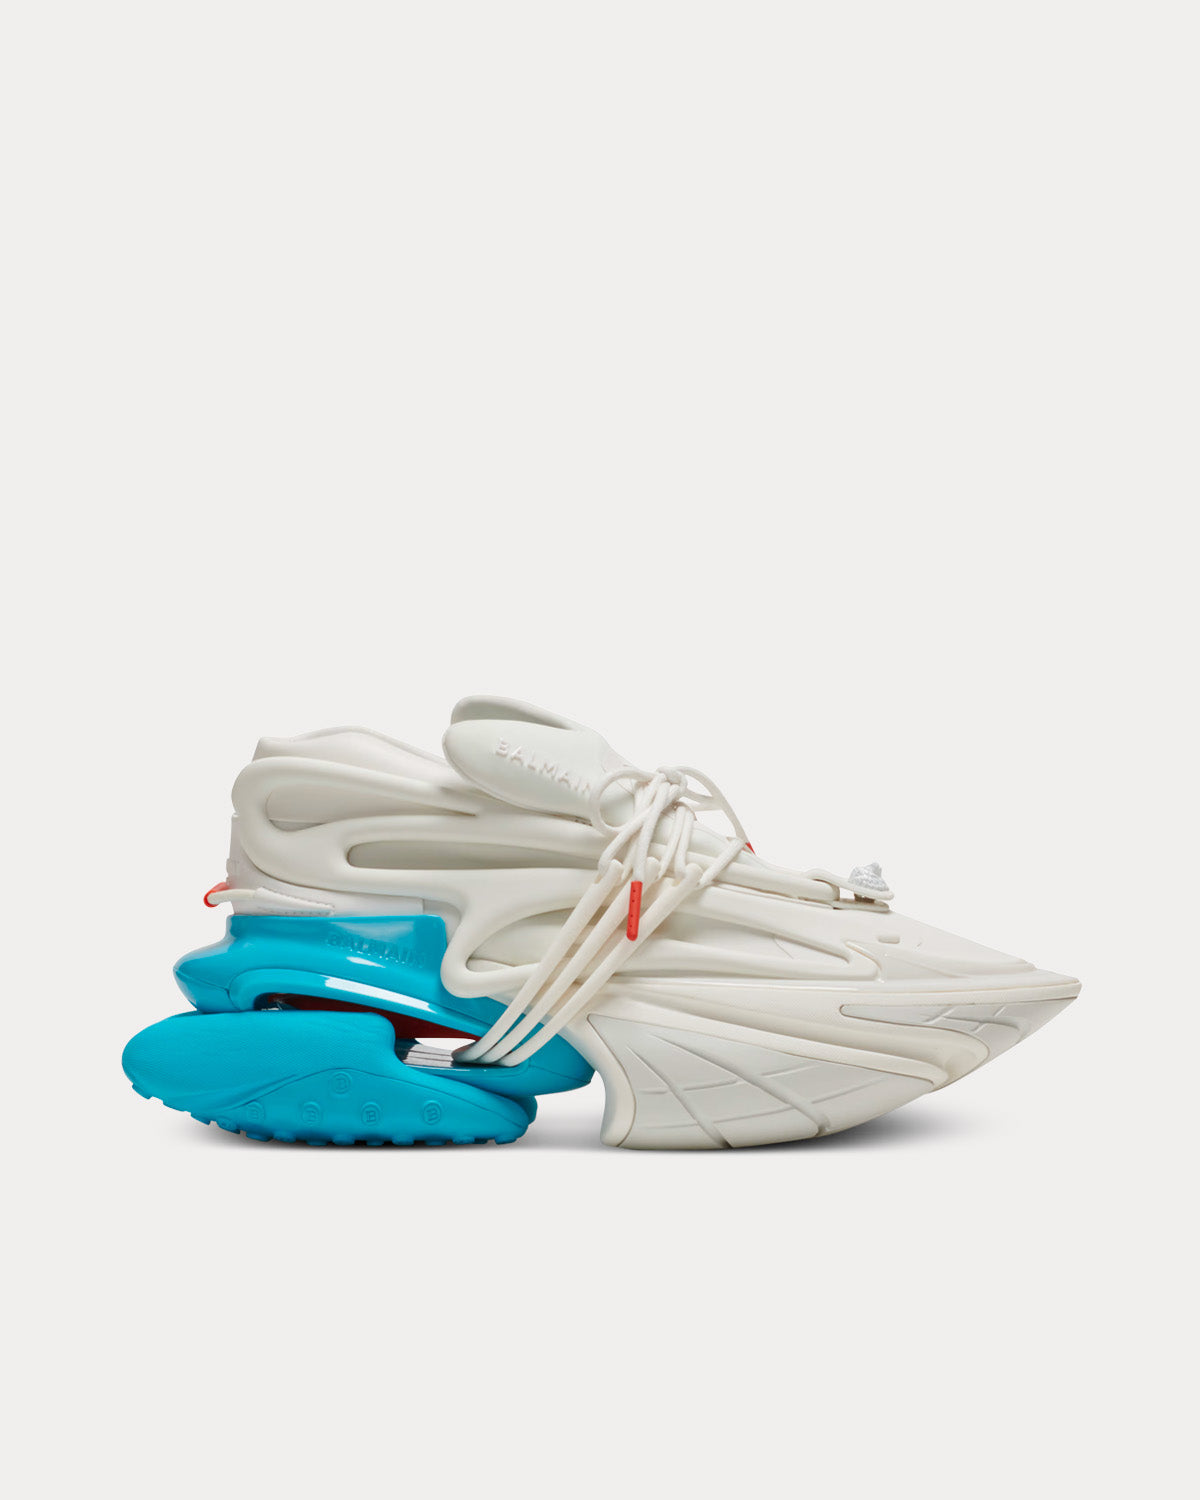 Balmain - Unicorn Neoprene & Leather Blue / White Low Top Sneakers